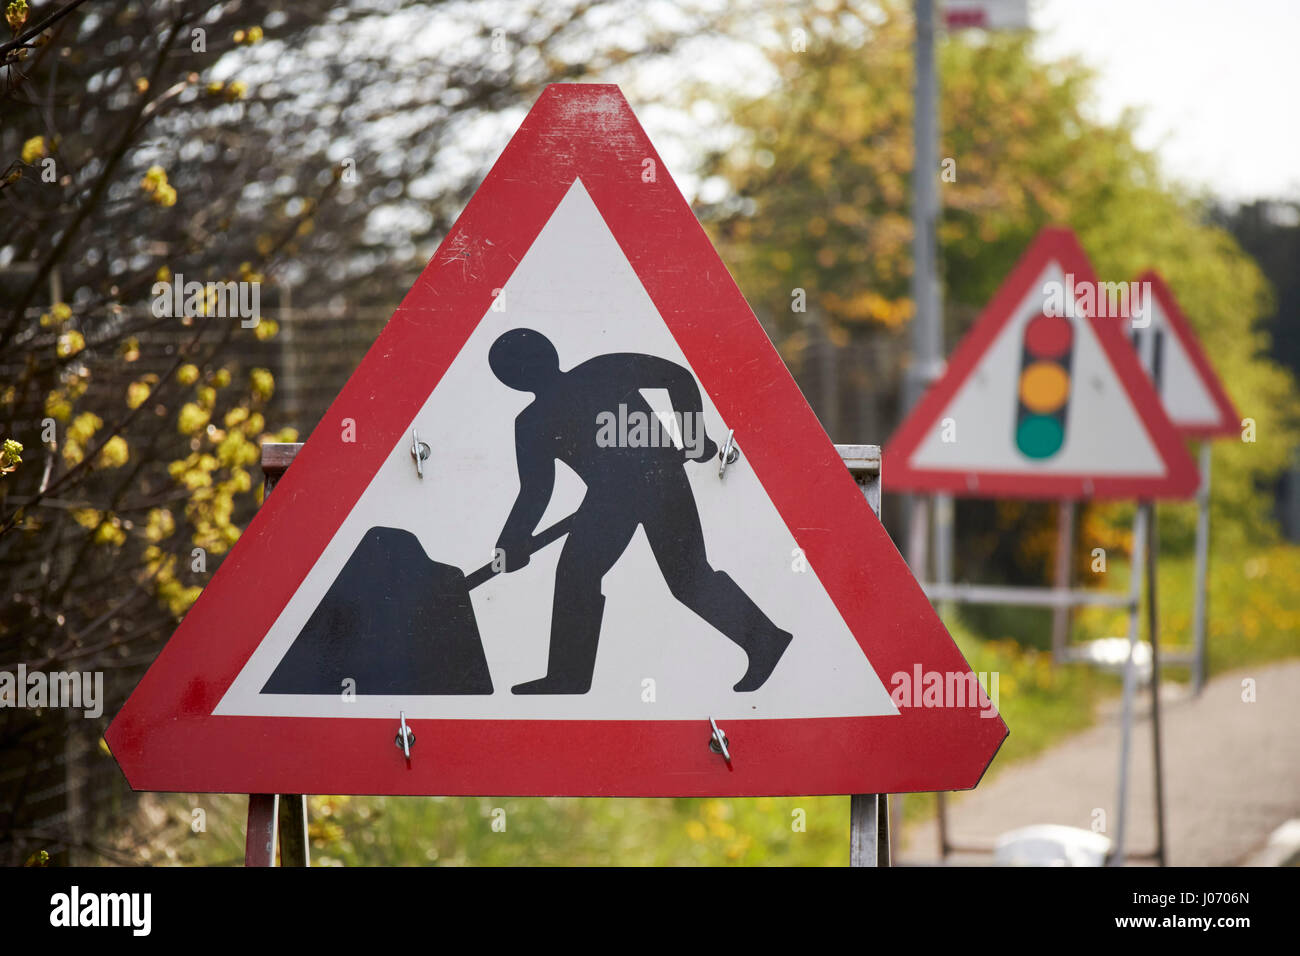 Men At Work Temporary Construction Traffic Signs Warning In